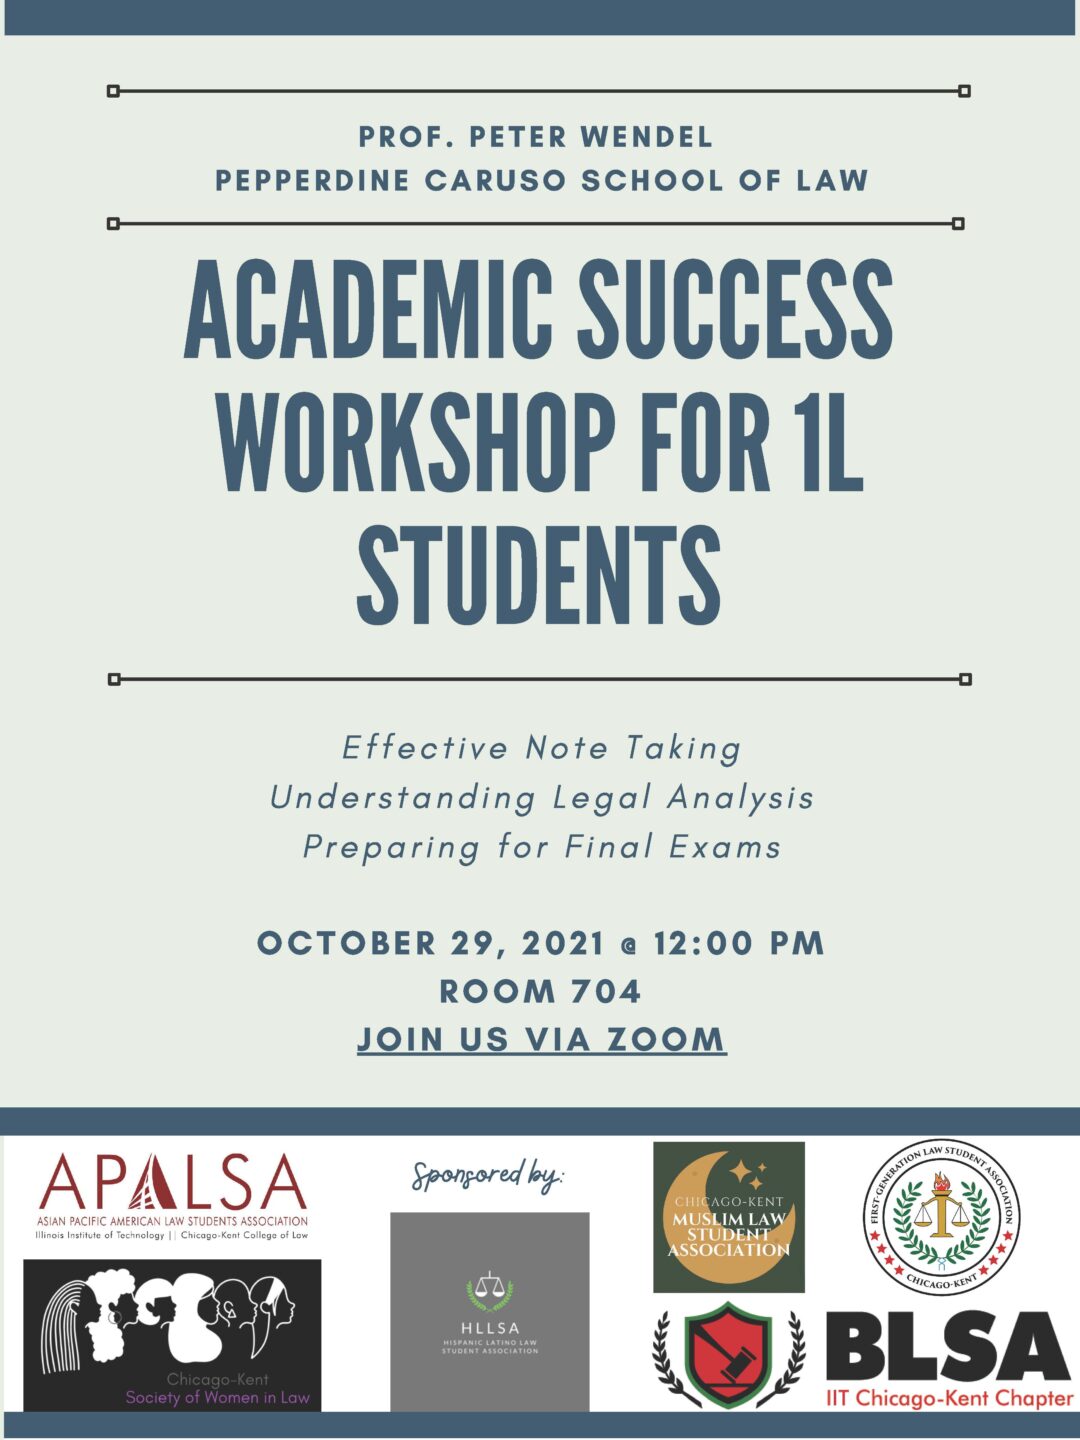 Flyer image for Academic Success Workshop in 2021 with Professor Wendel